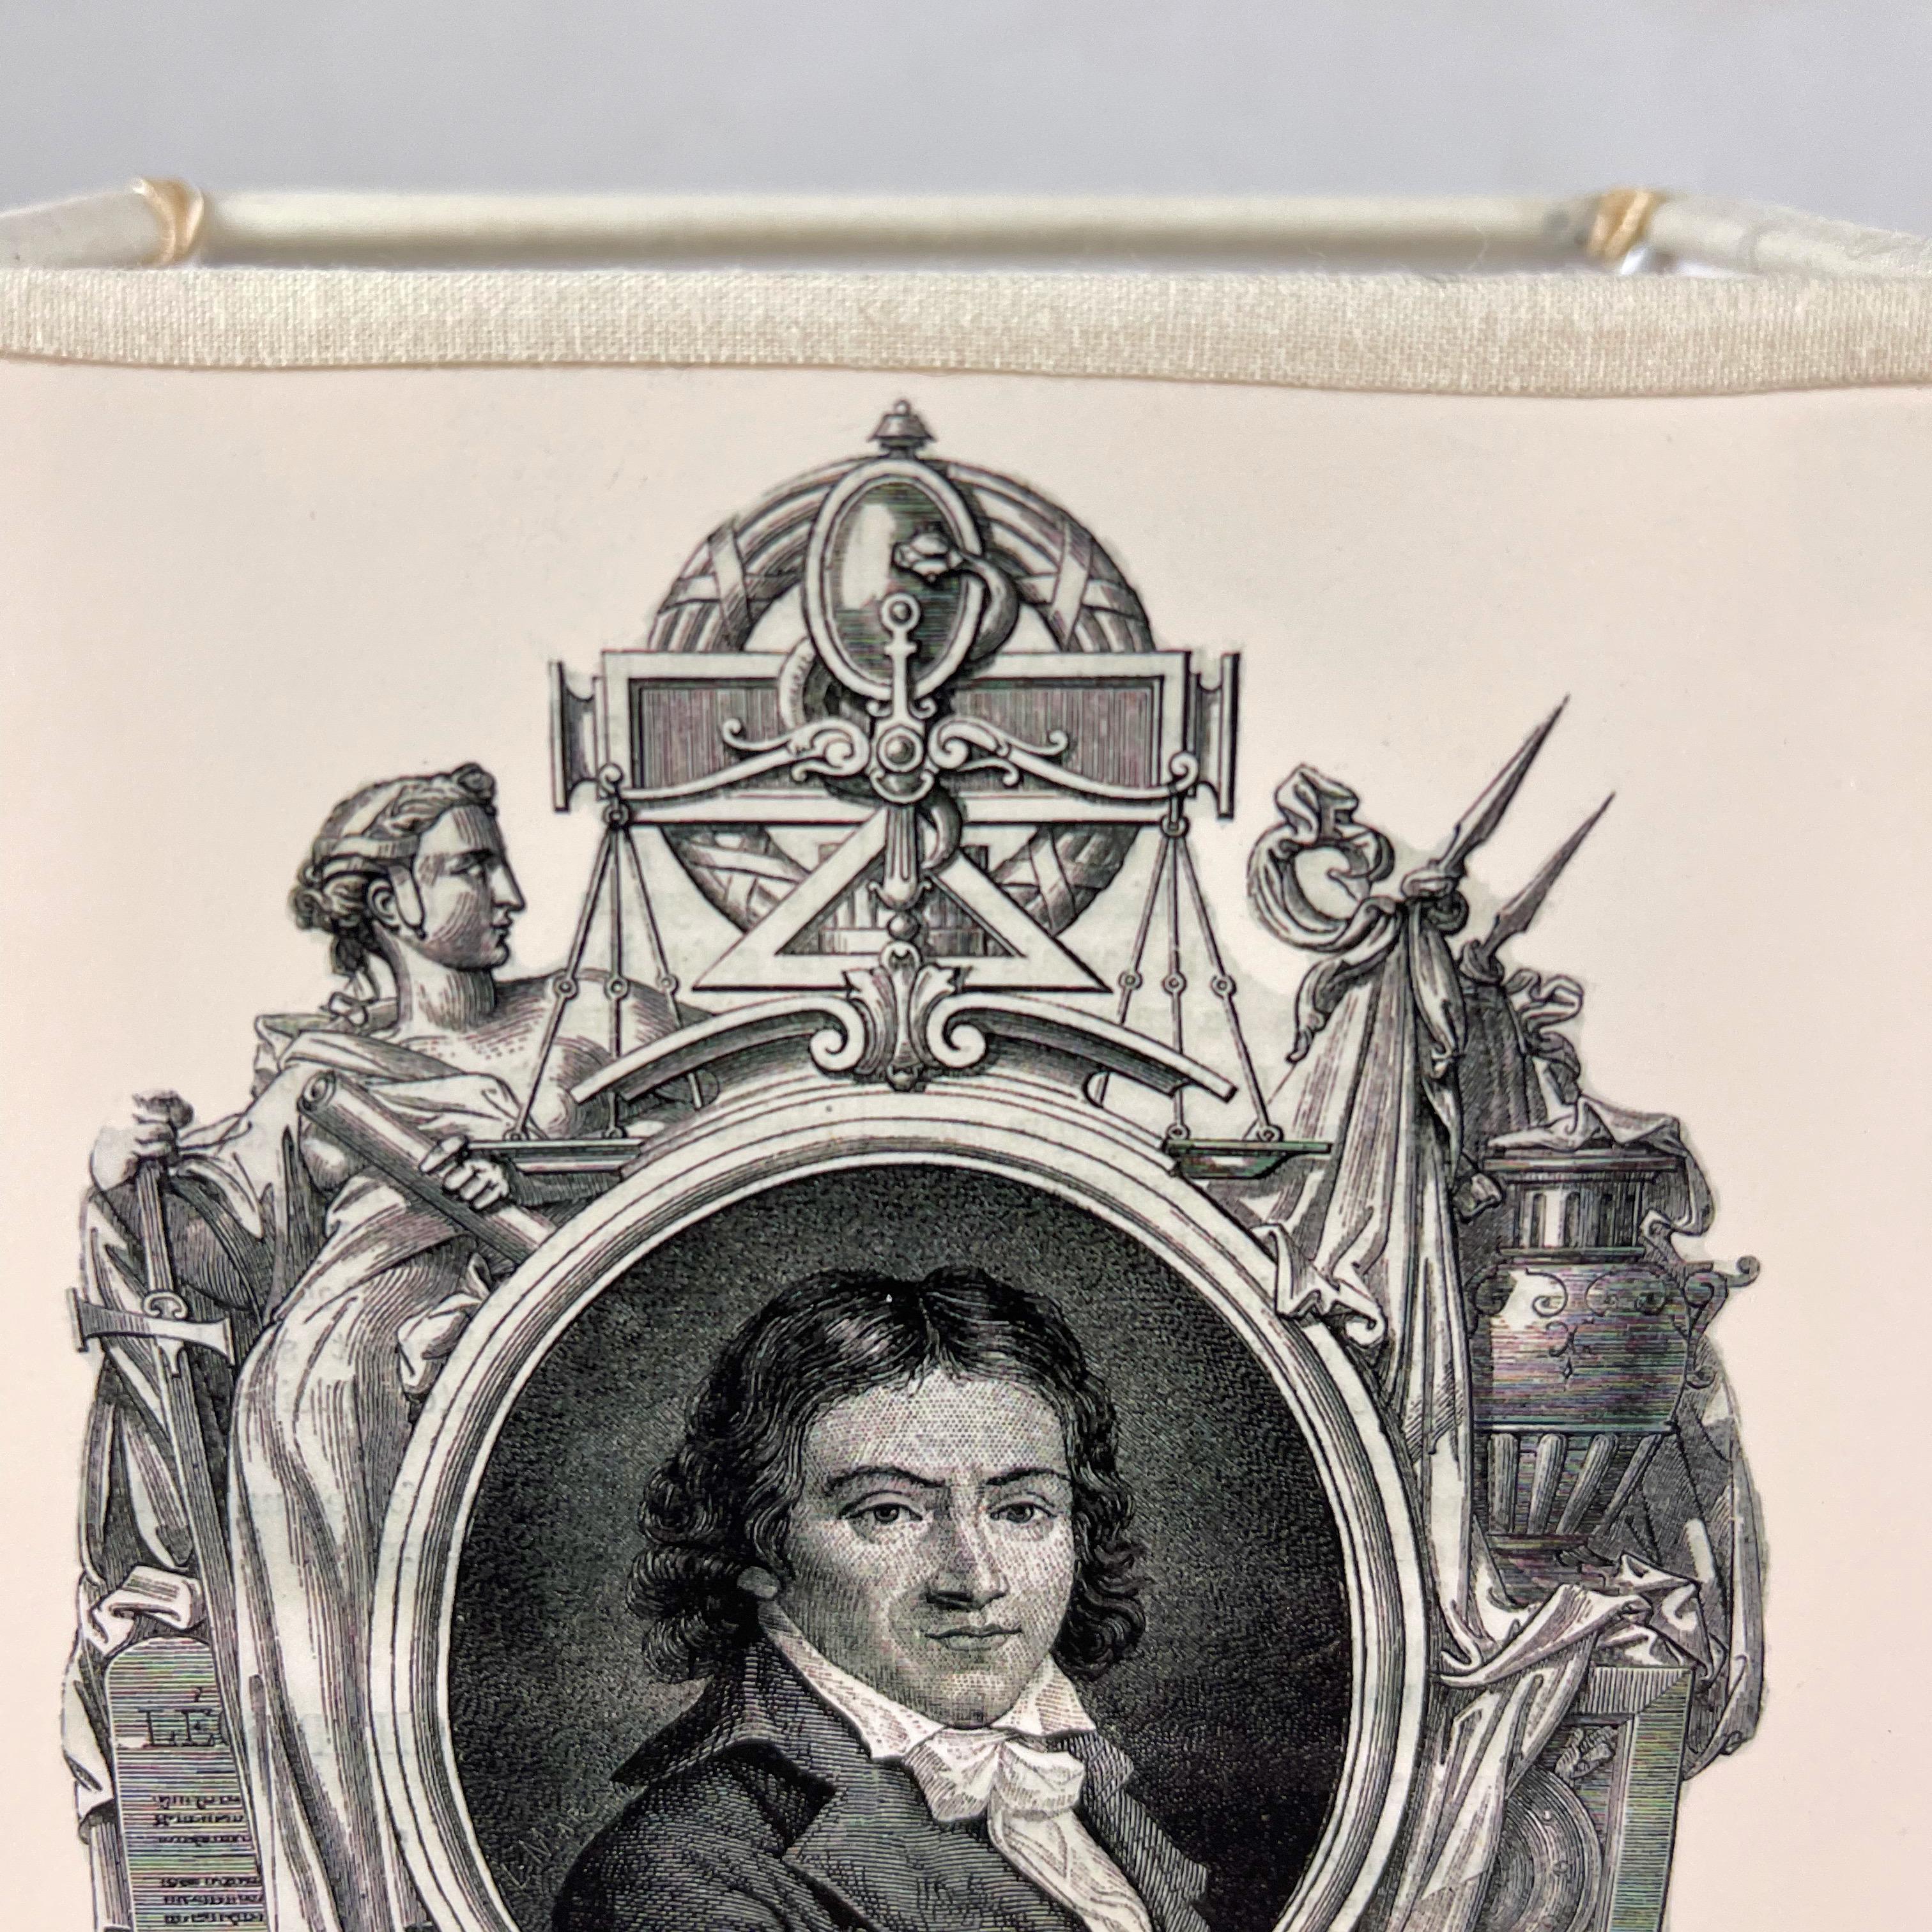 Fabric Handmade French Vellum Printed Lampshade, a Neo-Classical Empire Gentleman